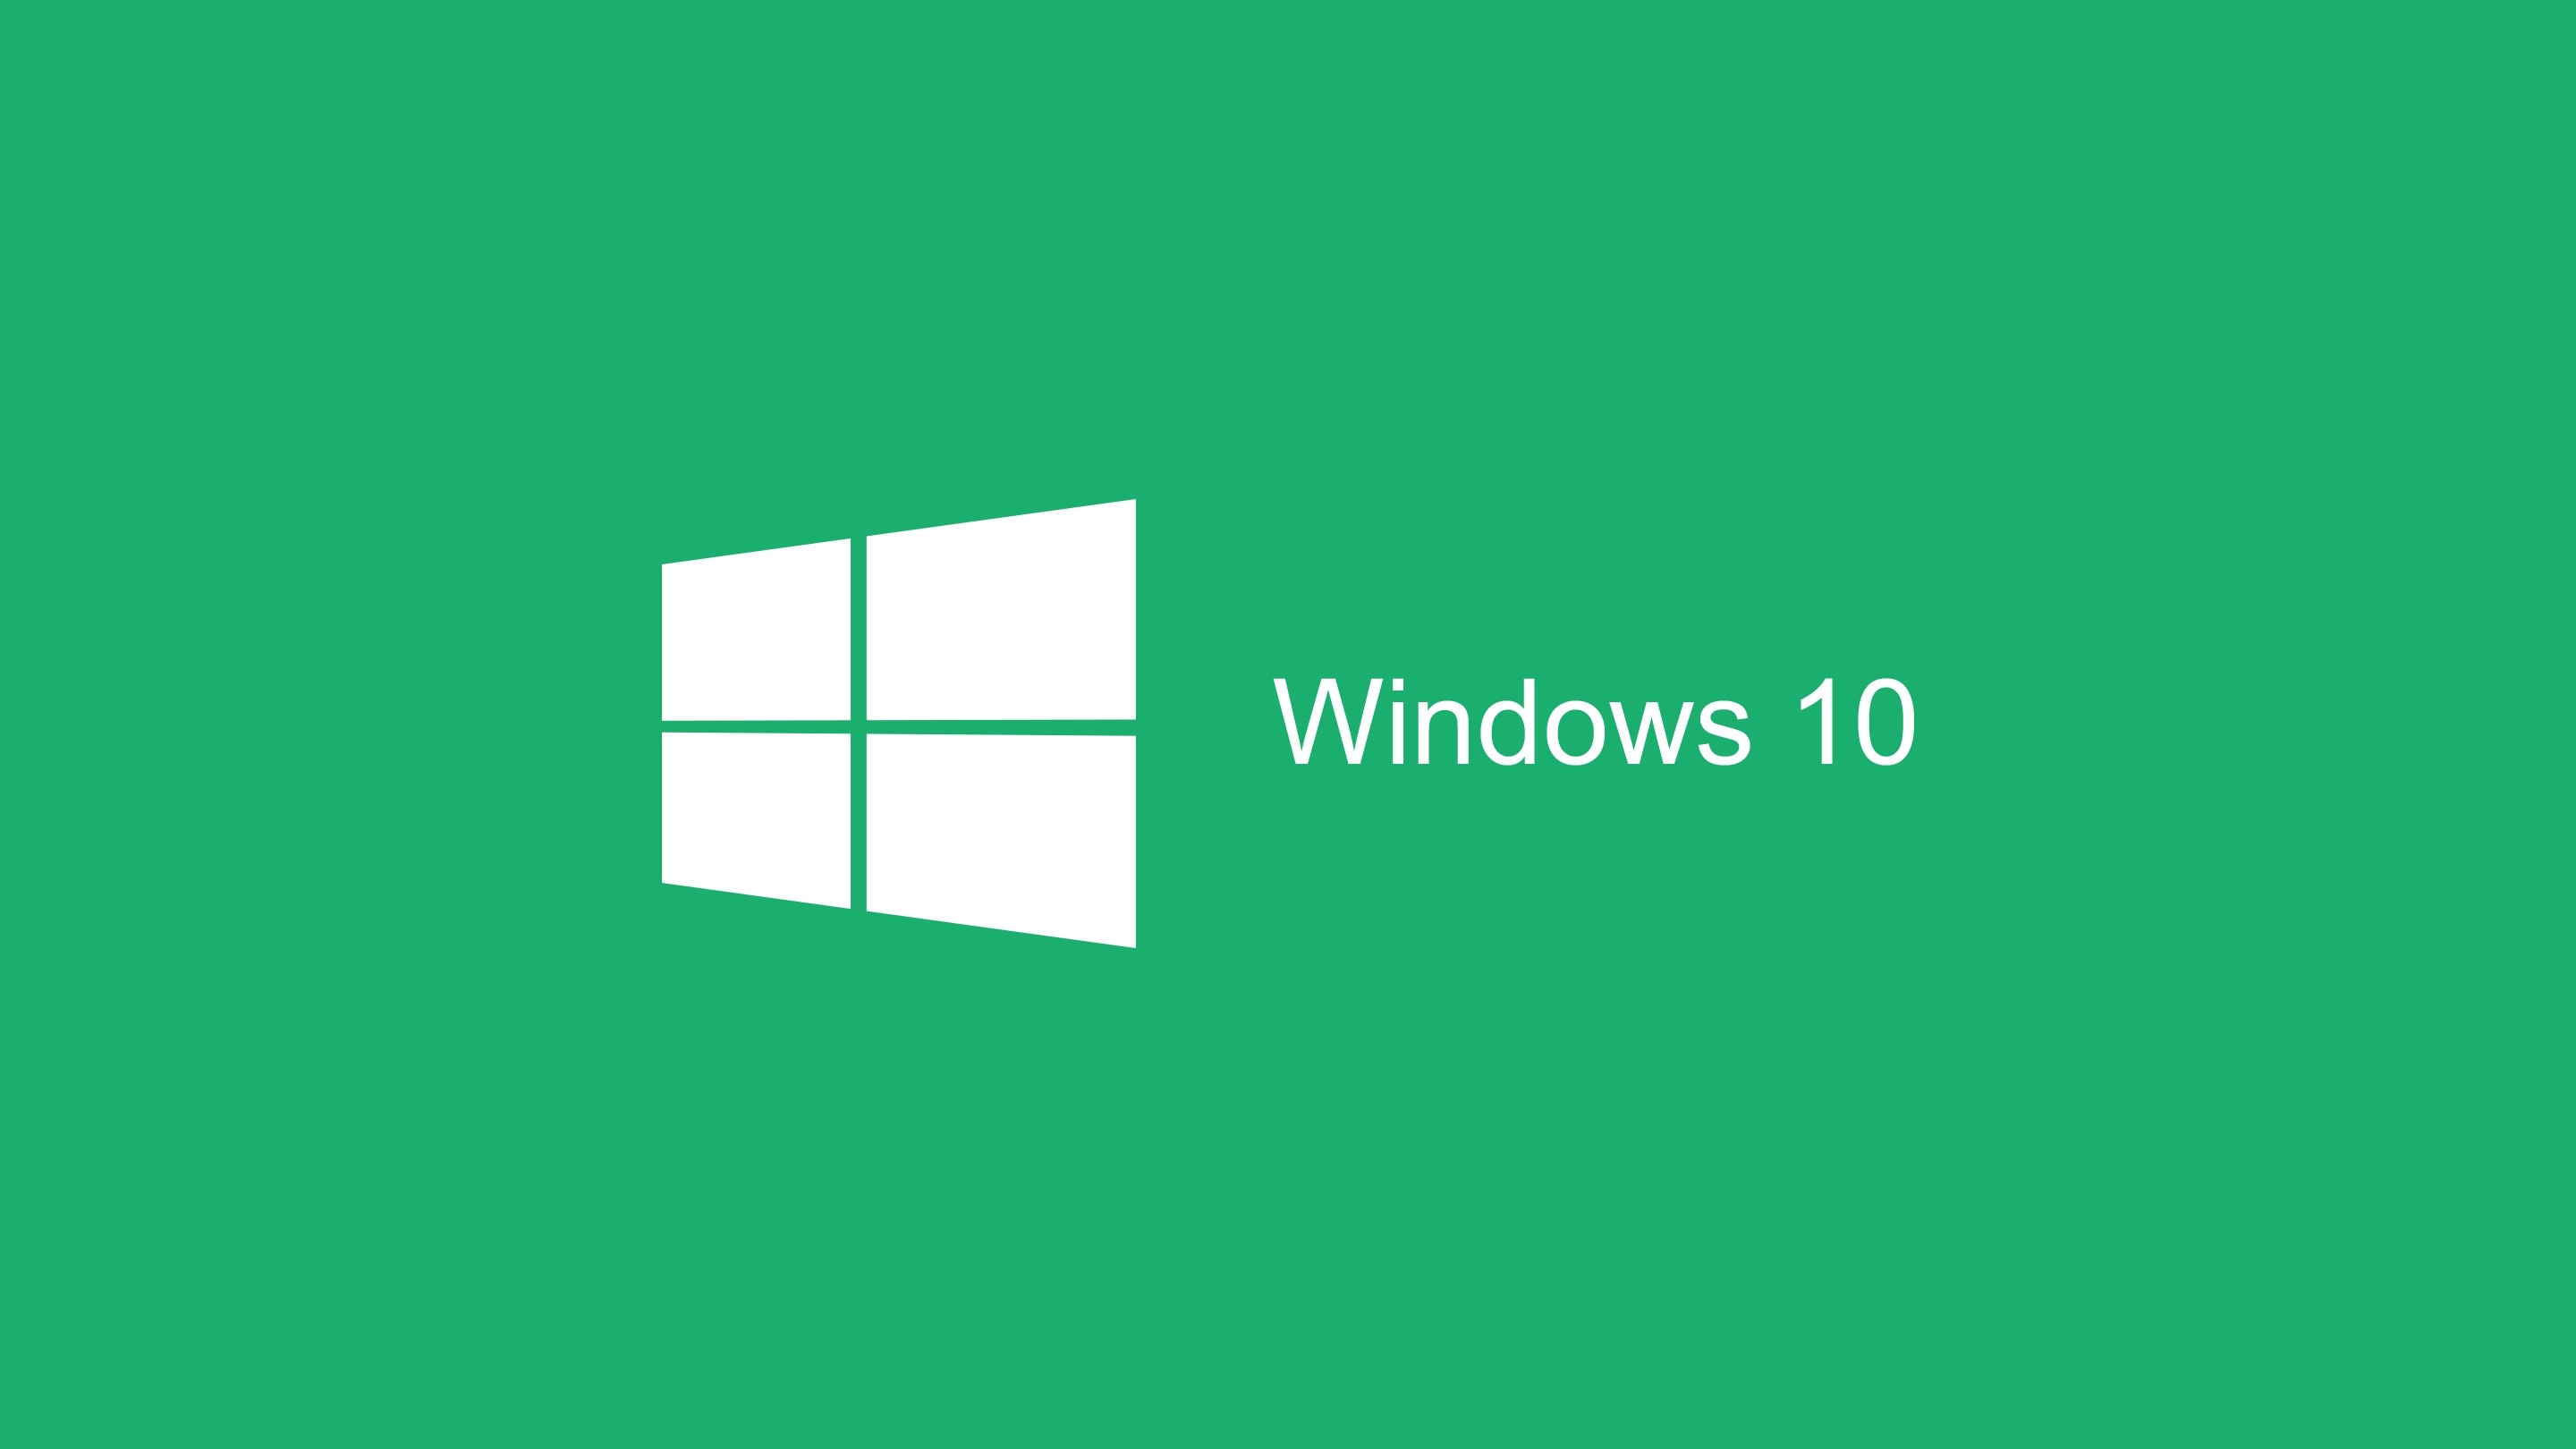 windows_10_2015_green_background-wallpaper-2880x1620.jpg